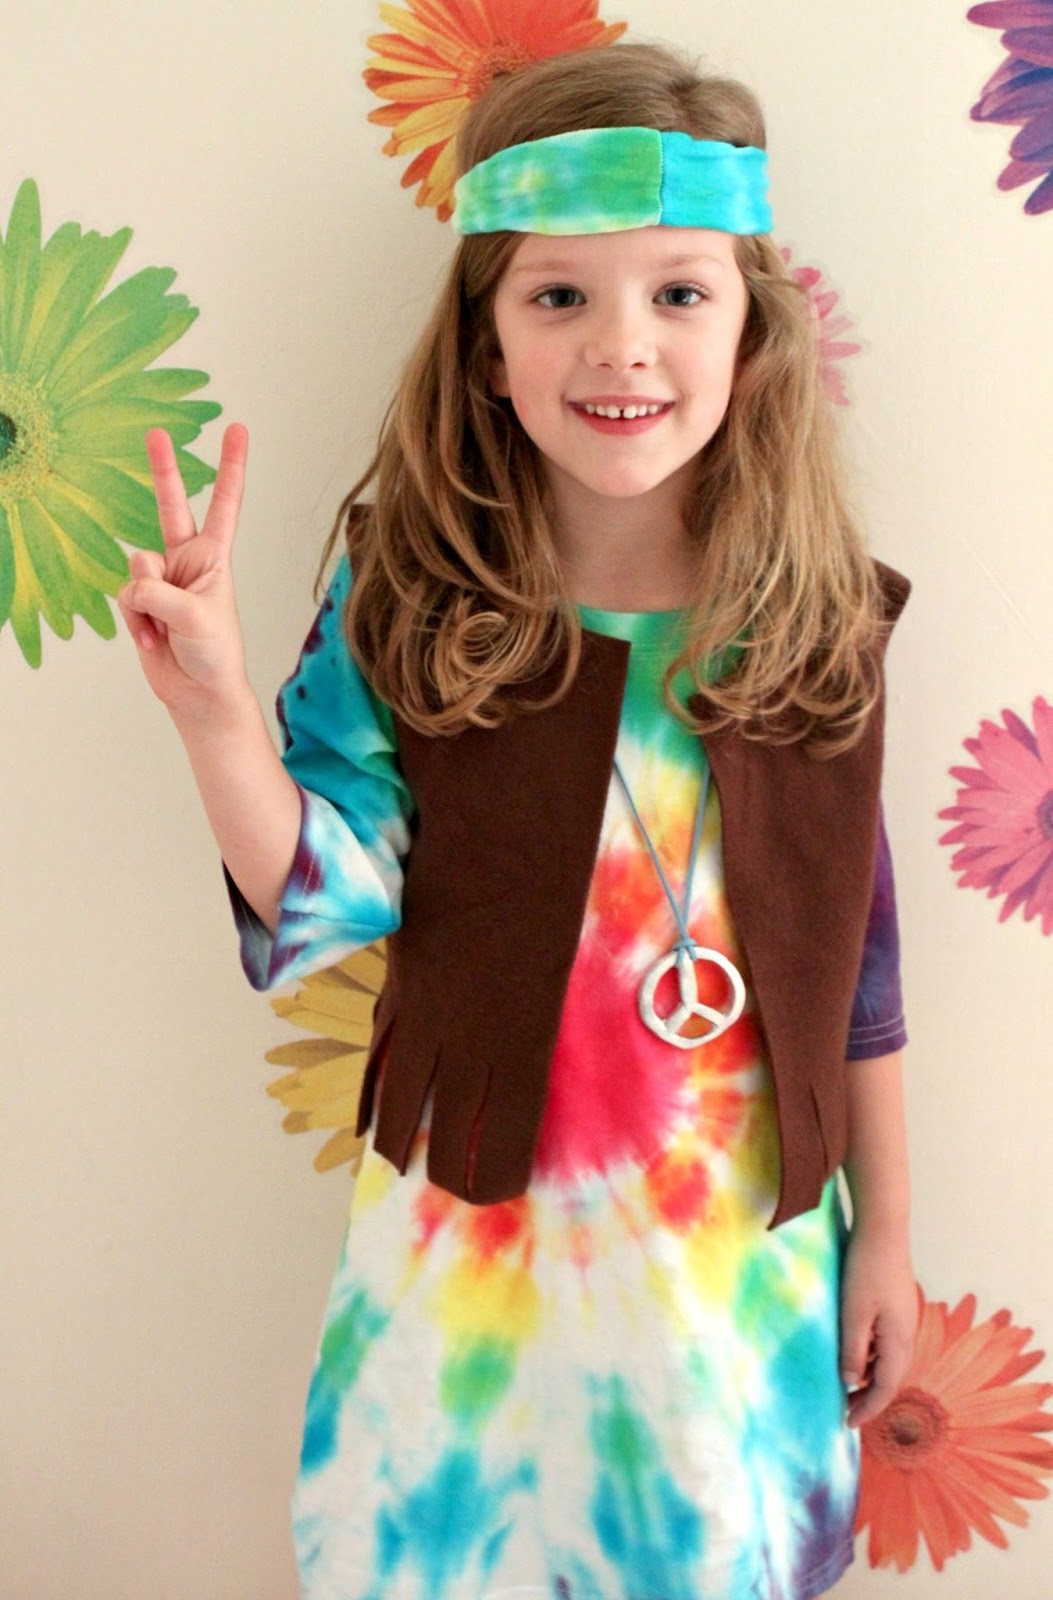 70S Dress Up Ideas For Kids
 EAT SLEEP MAKE Kid s Hippie Costume Tutorial